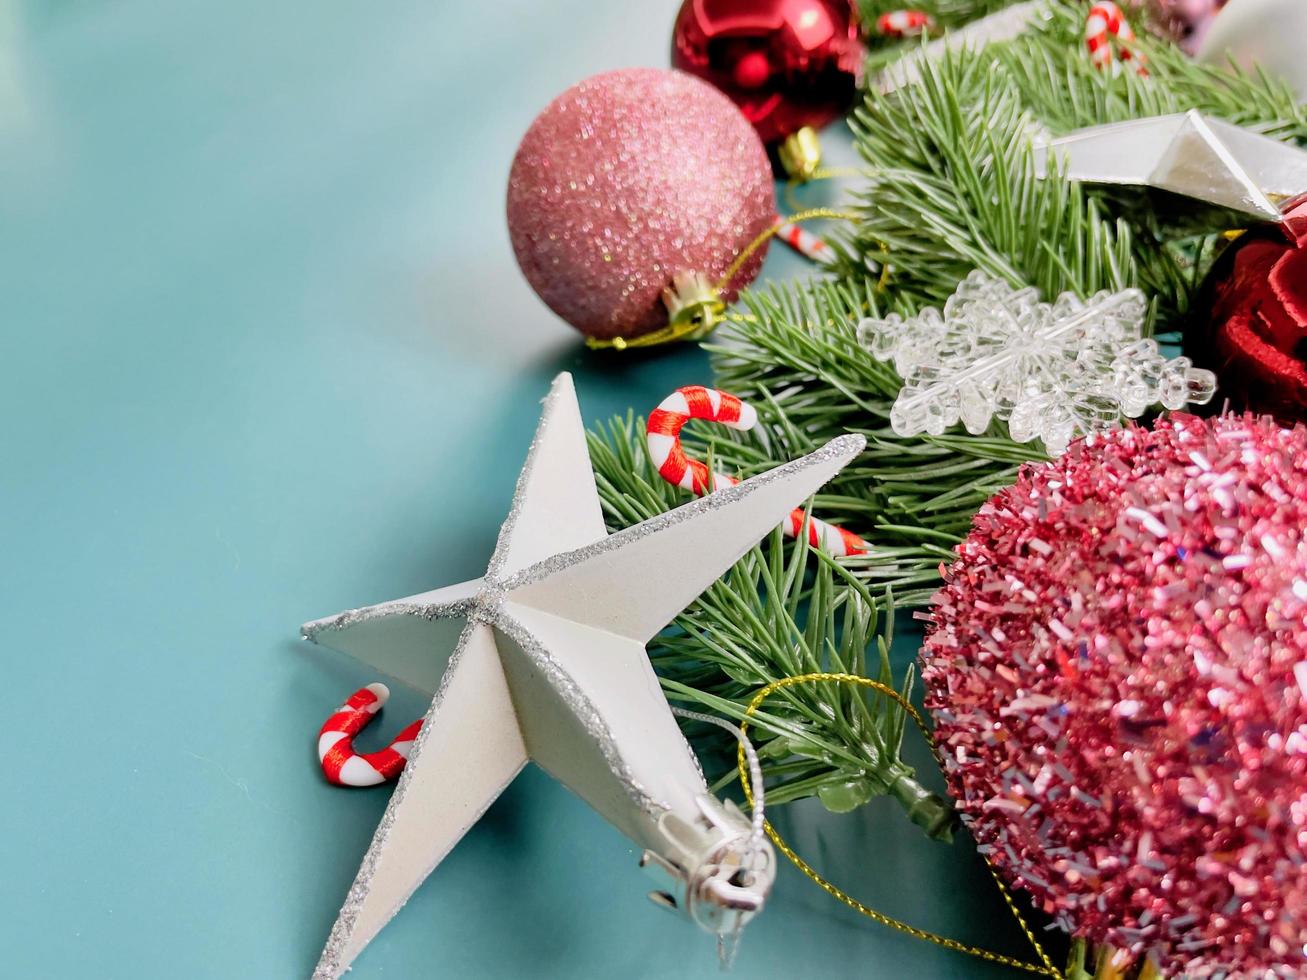 decorazioni natalizie, foglie di pino, palline rosse, fiocchi di neve, bacche rosse su sfondo blu foto